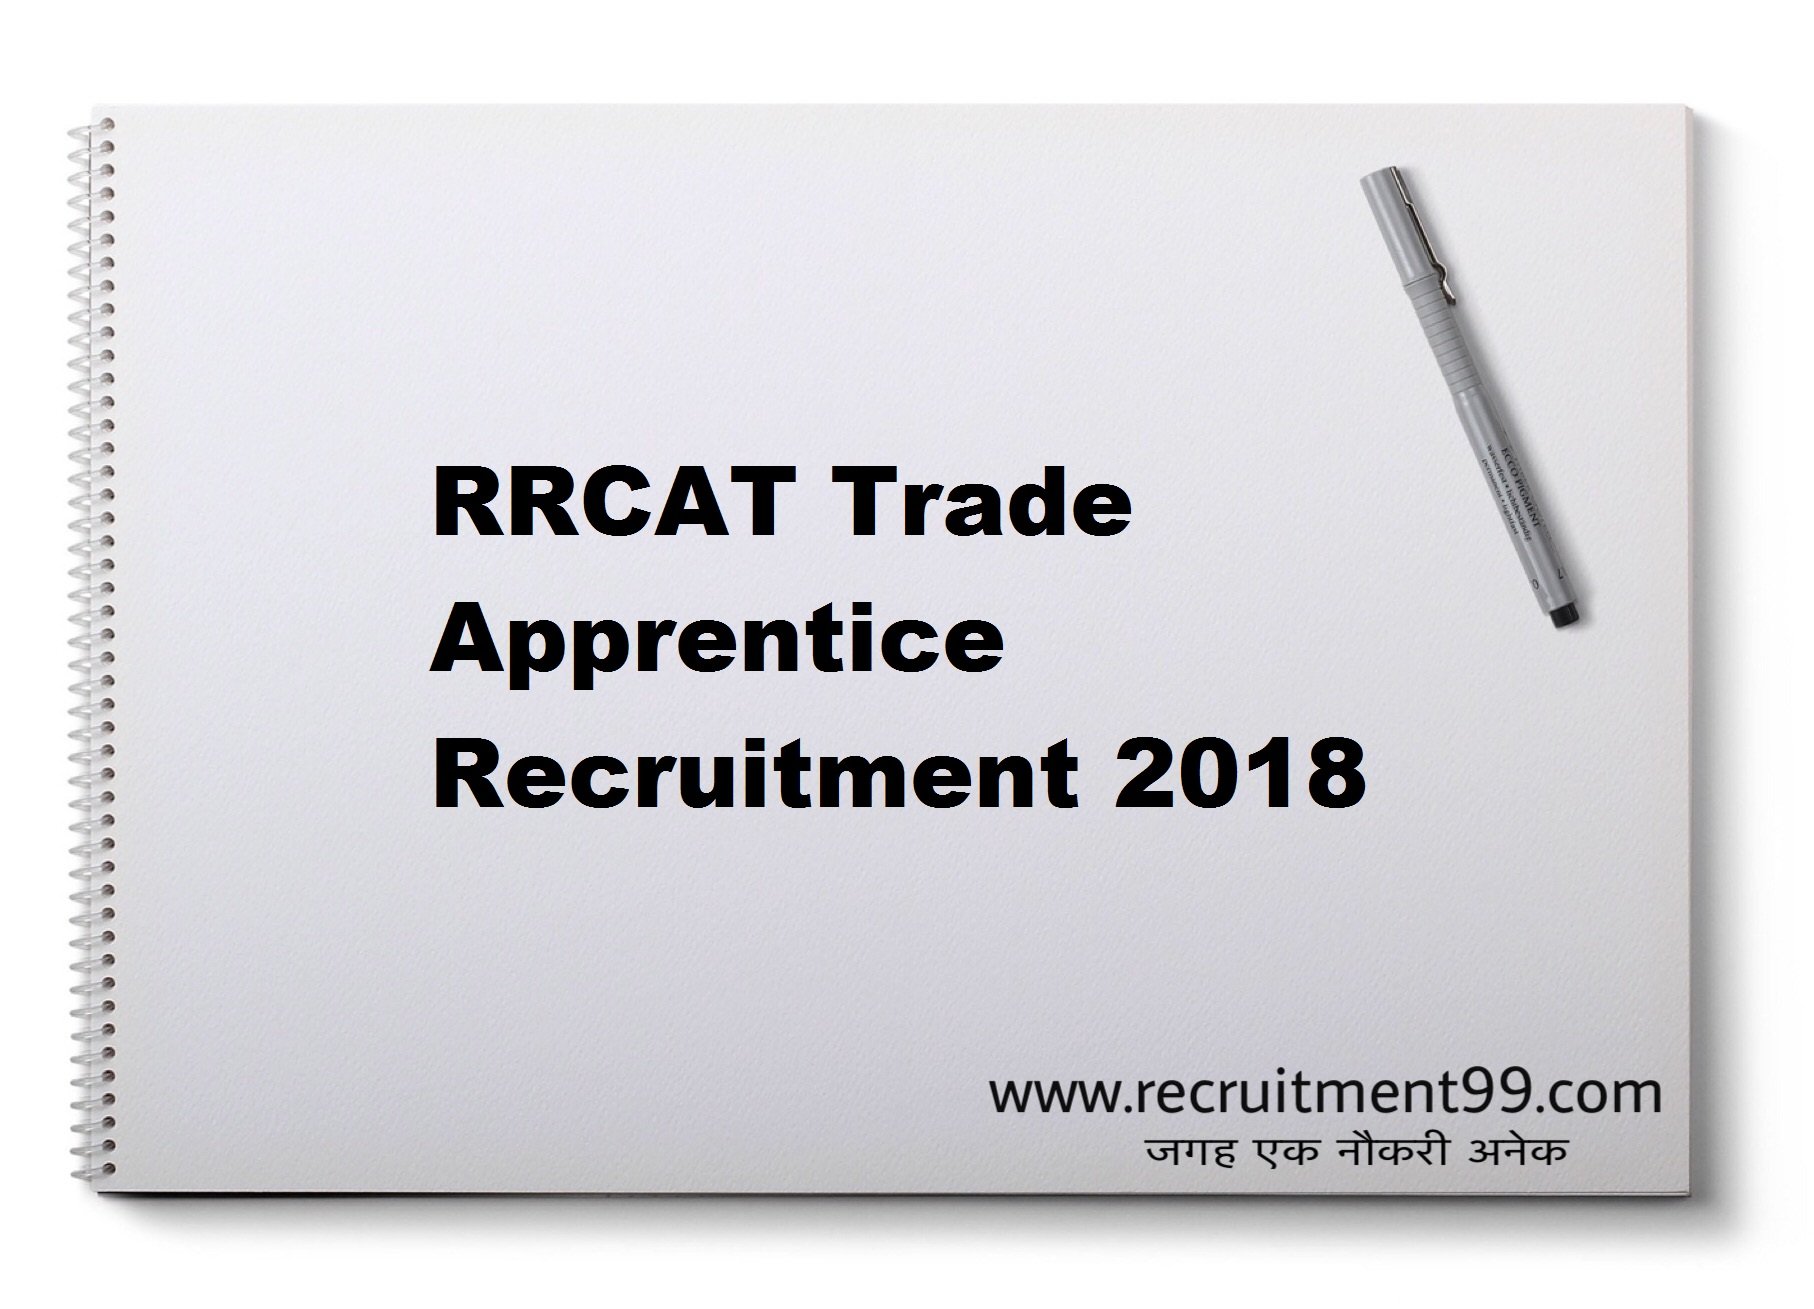 RRCAT Trade Apprentice Recruitment Admit Card Result 2018